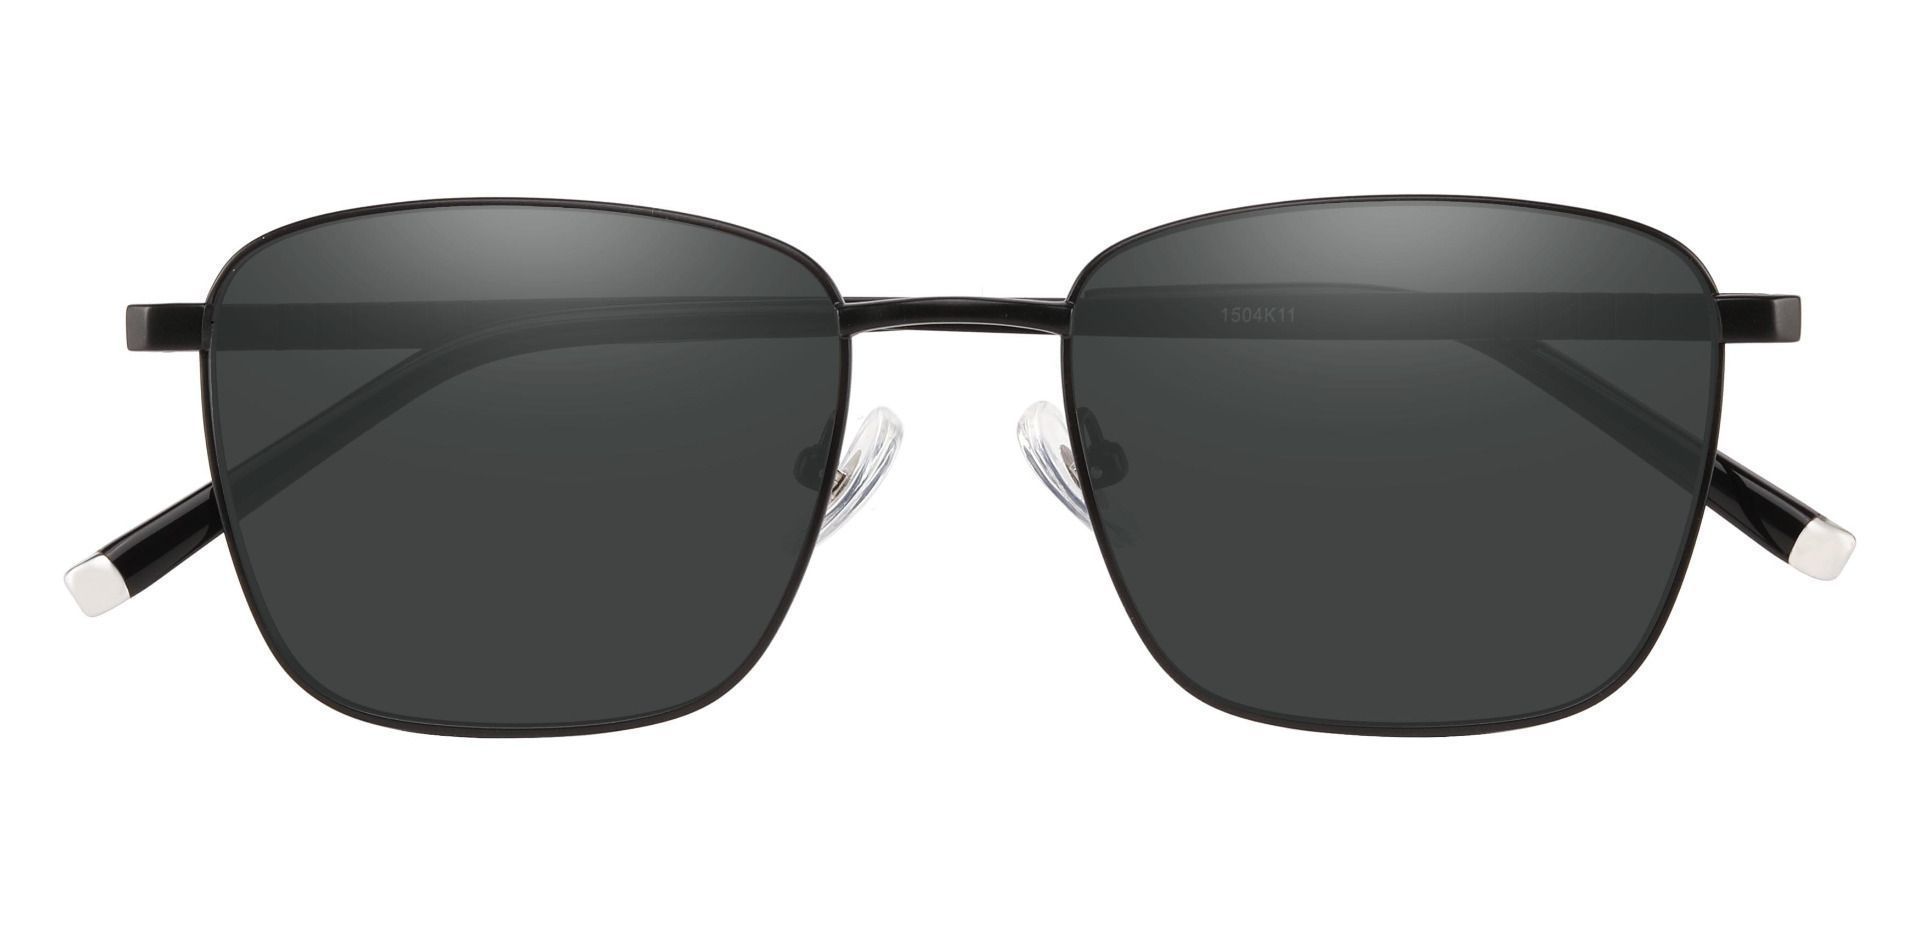 May Square Progressive Sunglasses - Black Frame With Gray Lenses